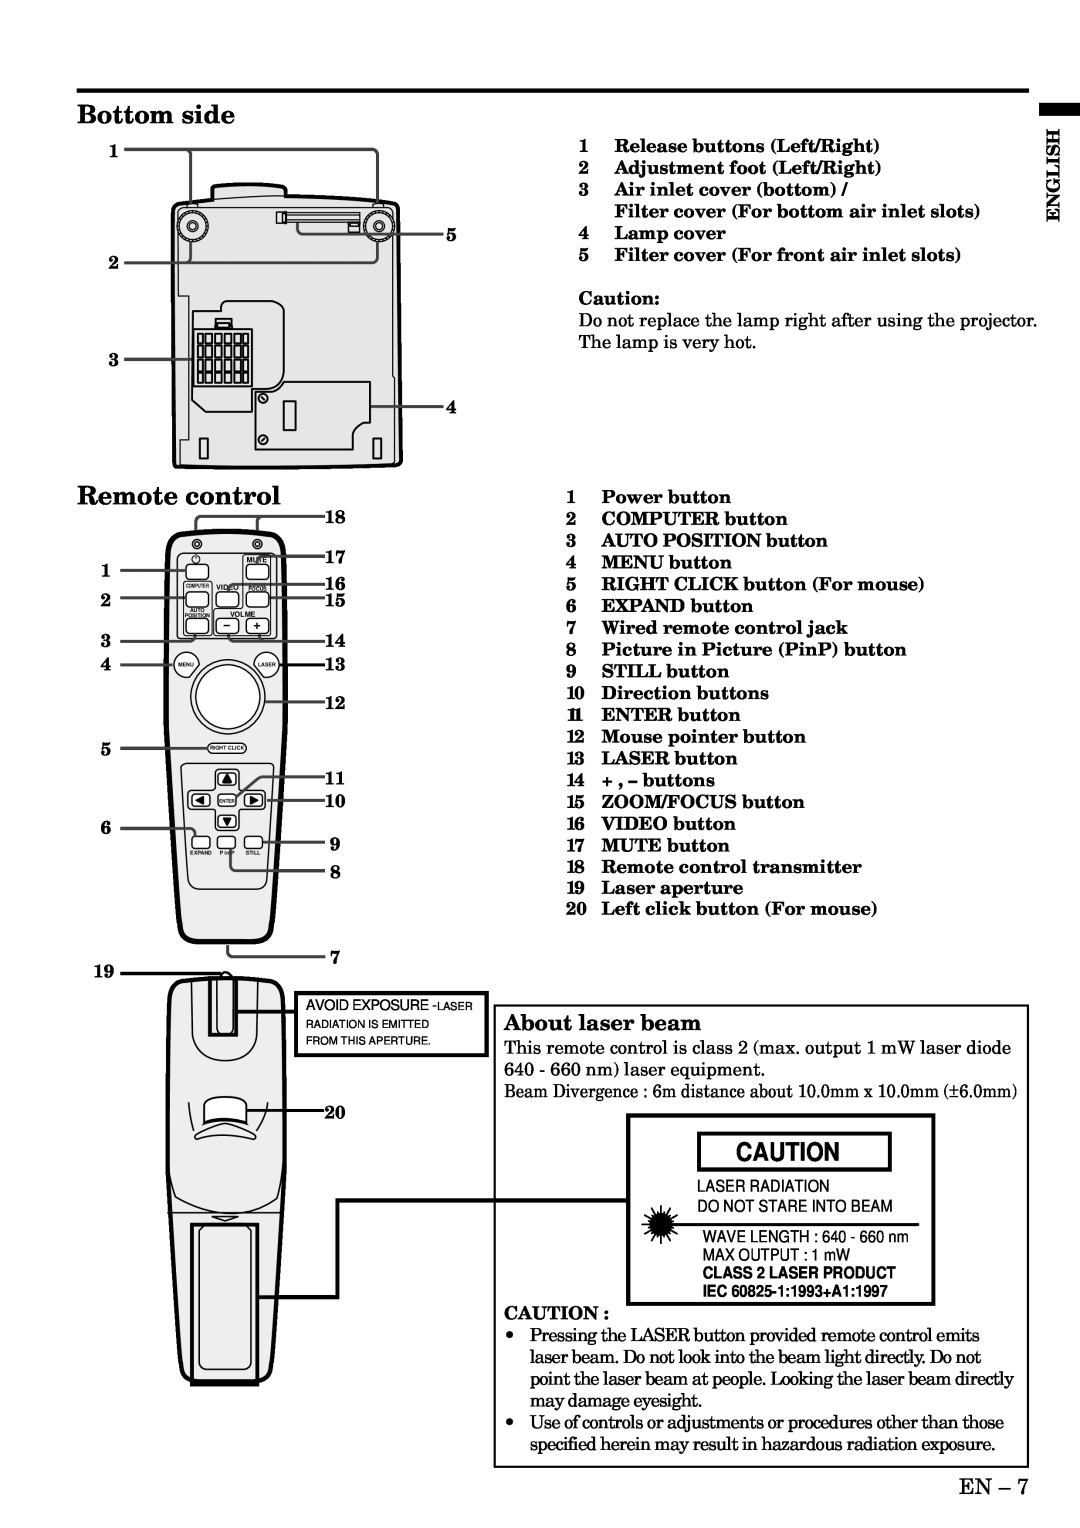 Mitsubishi Electronics S290U user manual Bottom side, Remote control, About laser beam 